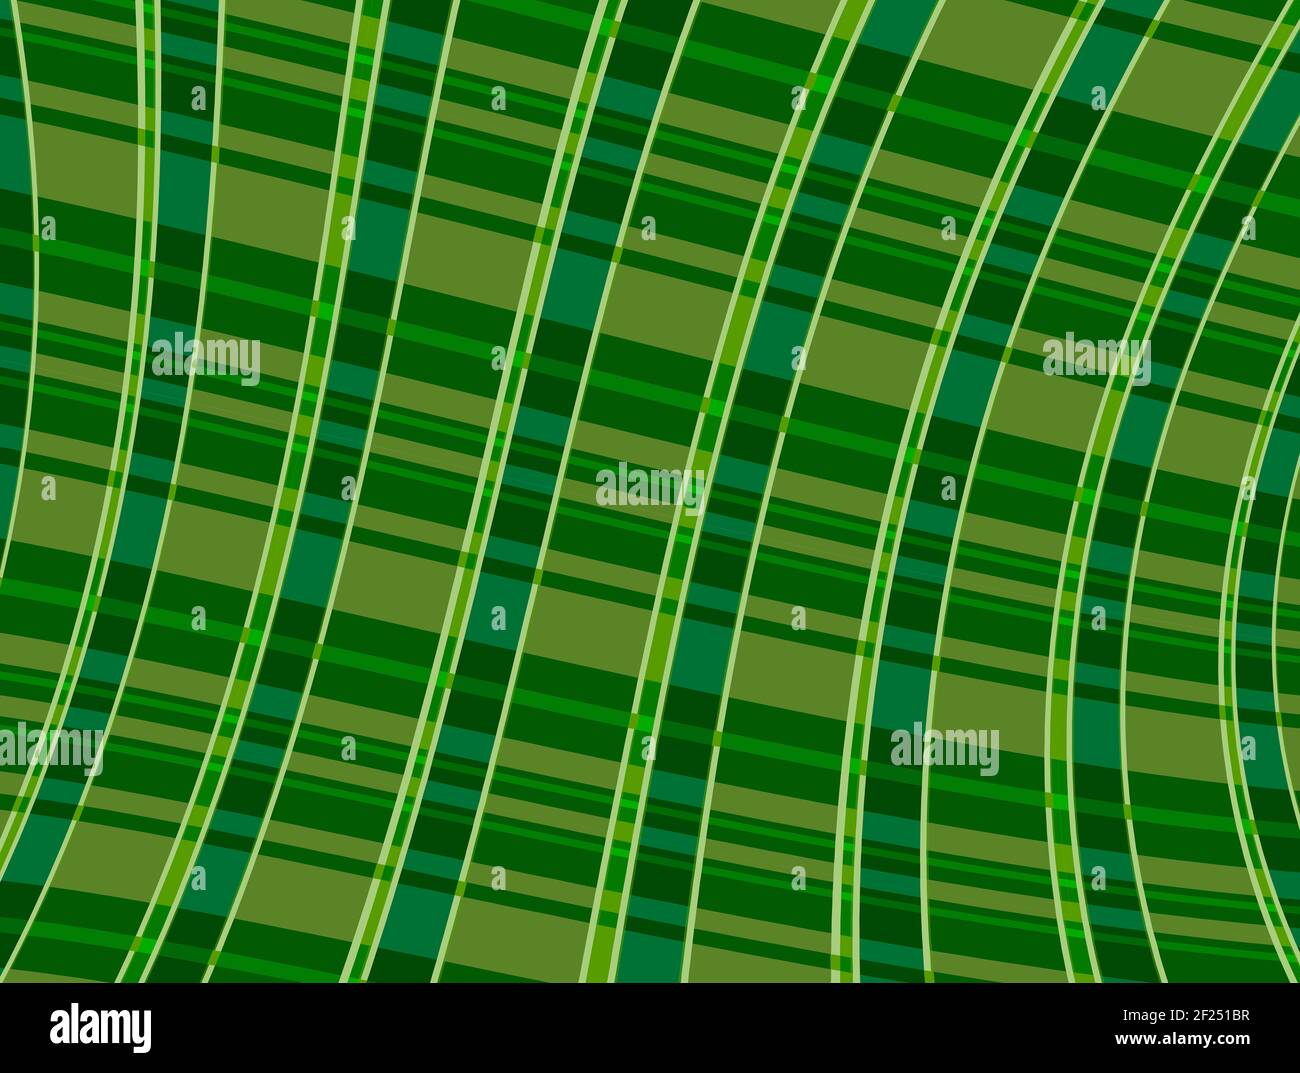 Karpfen Stil grün kariert st patricks Tag Urlaub Muster Illustration Grafik Stockfoto